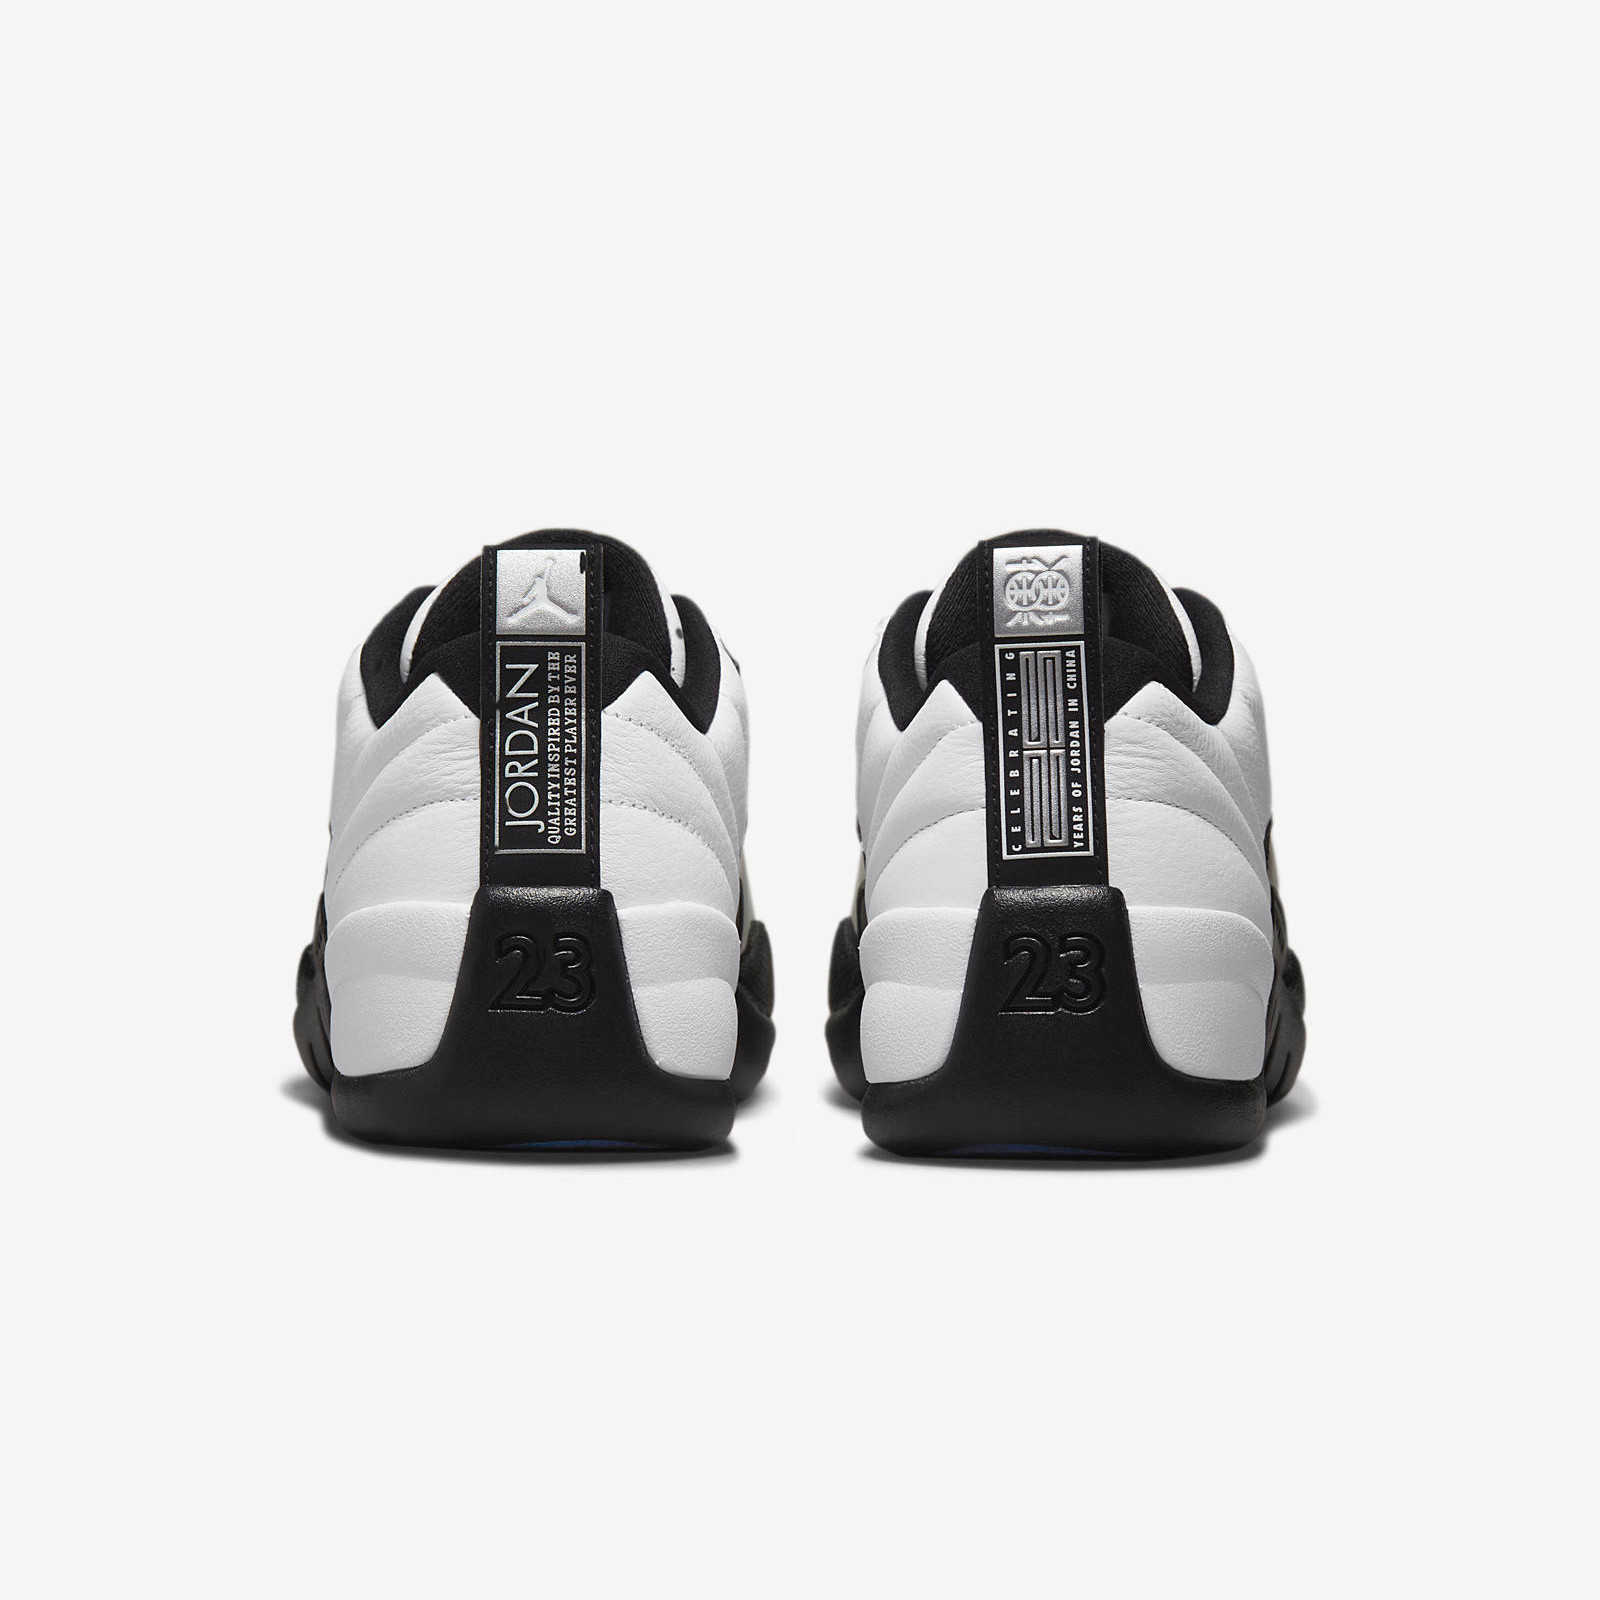 Air Jordan 12 Retro Low
White / Black